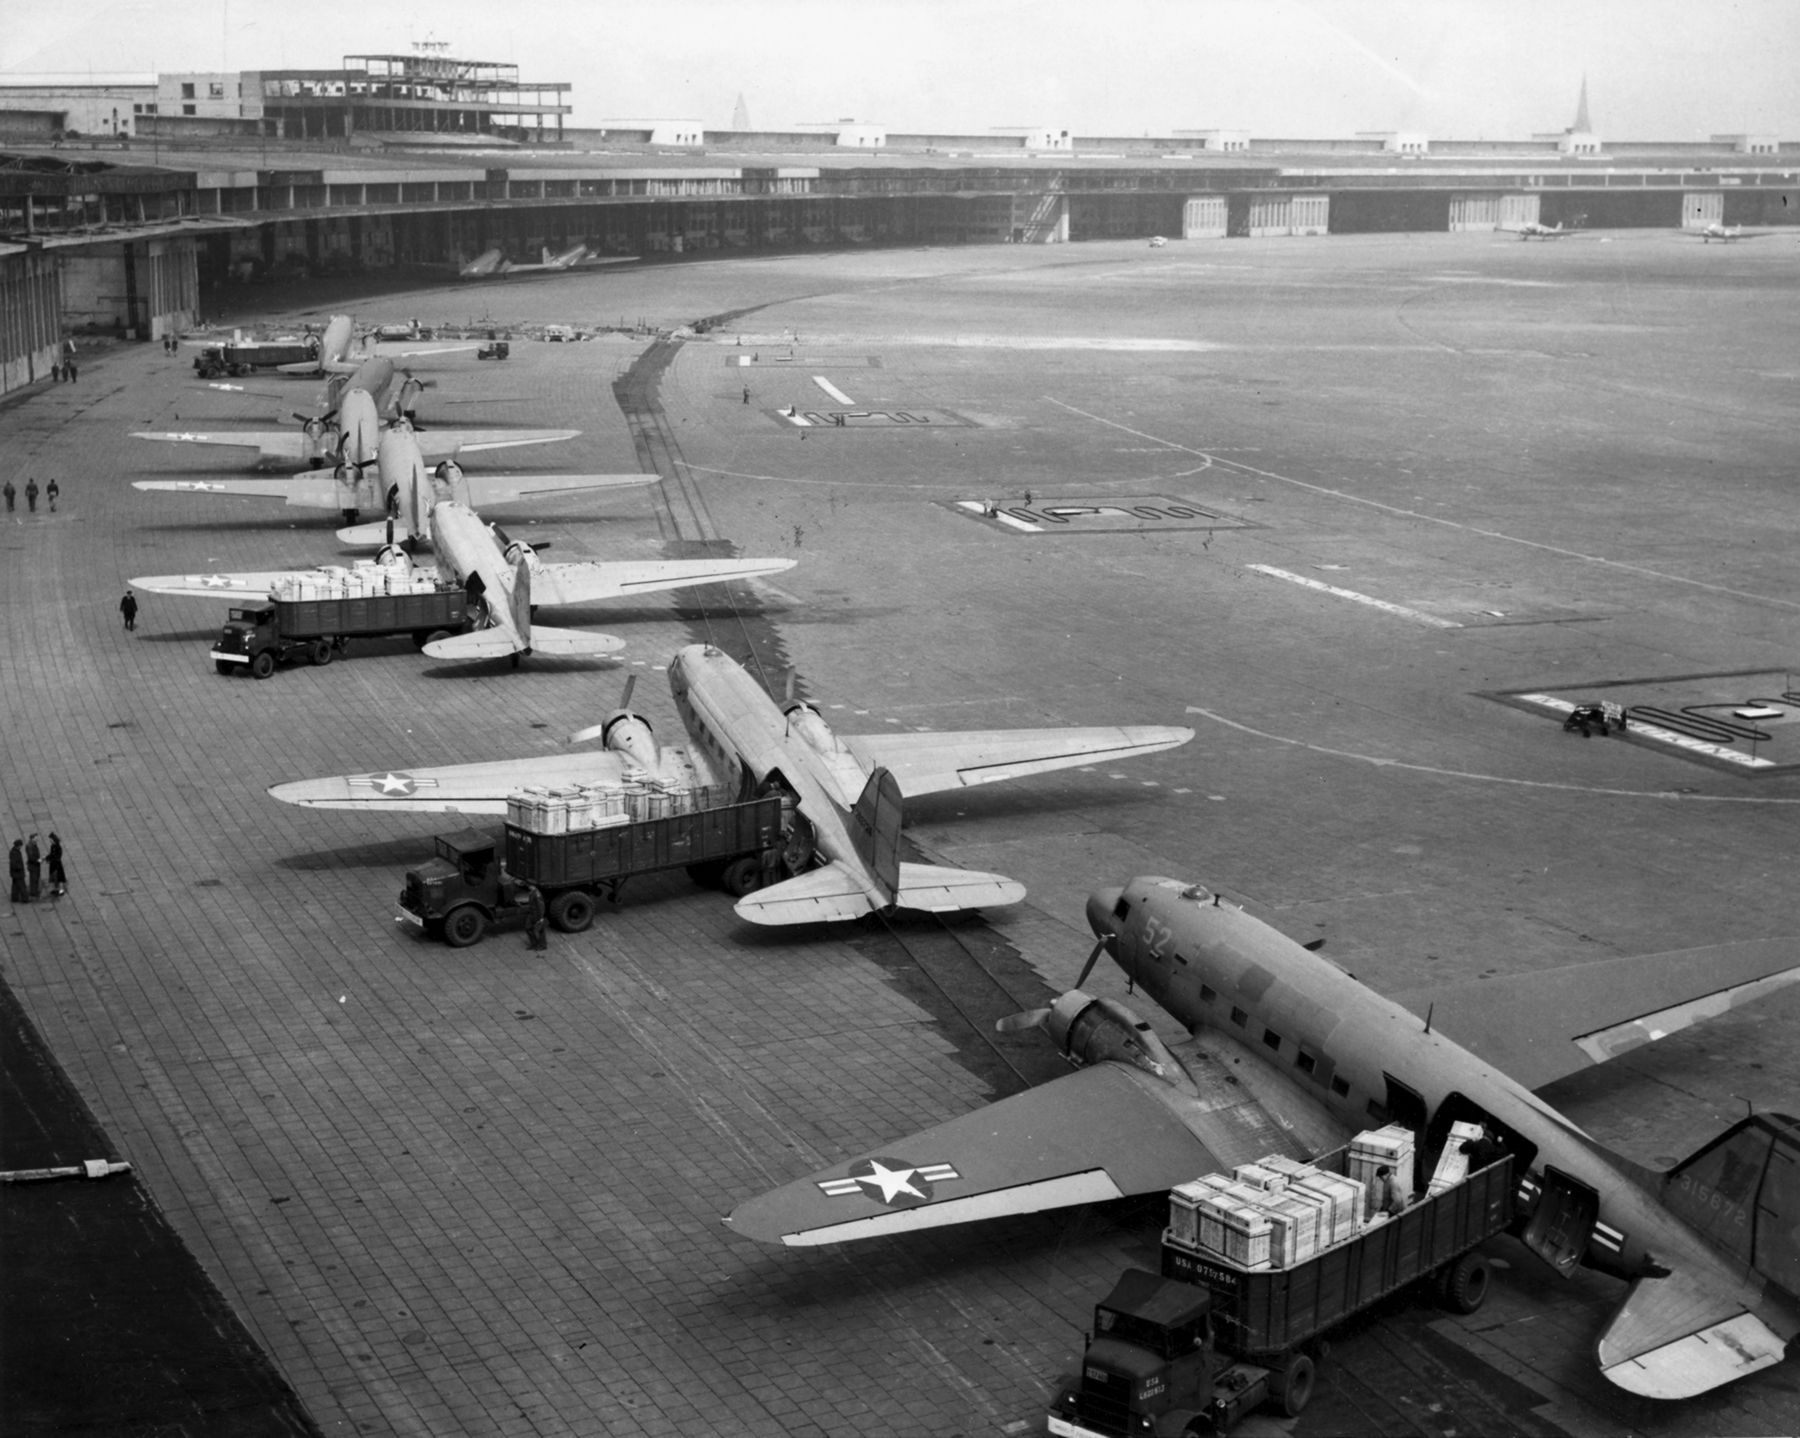 C-47s at Tempelhof